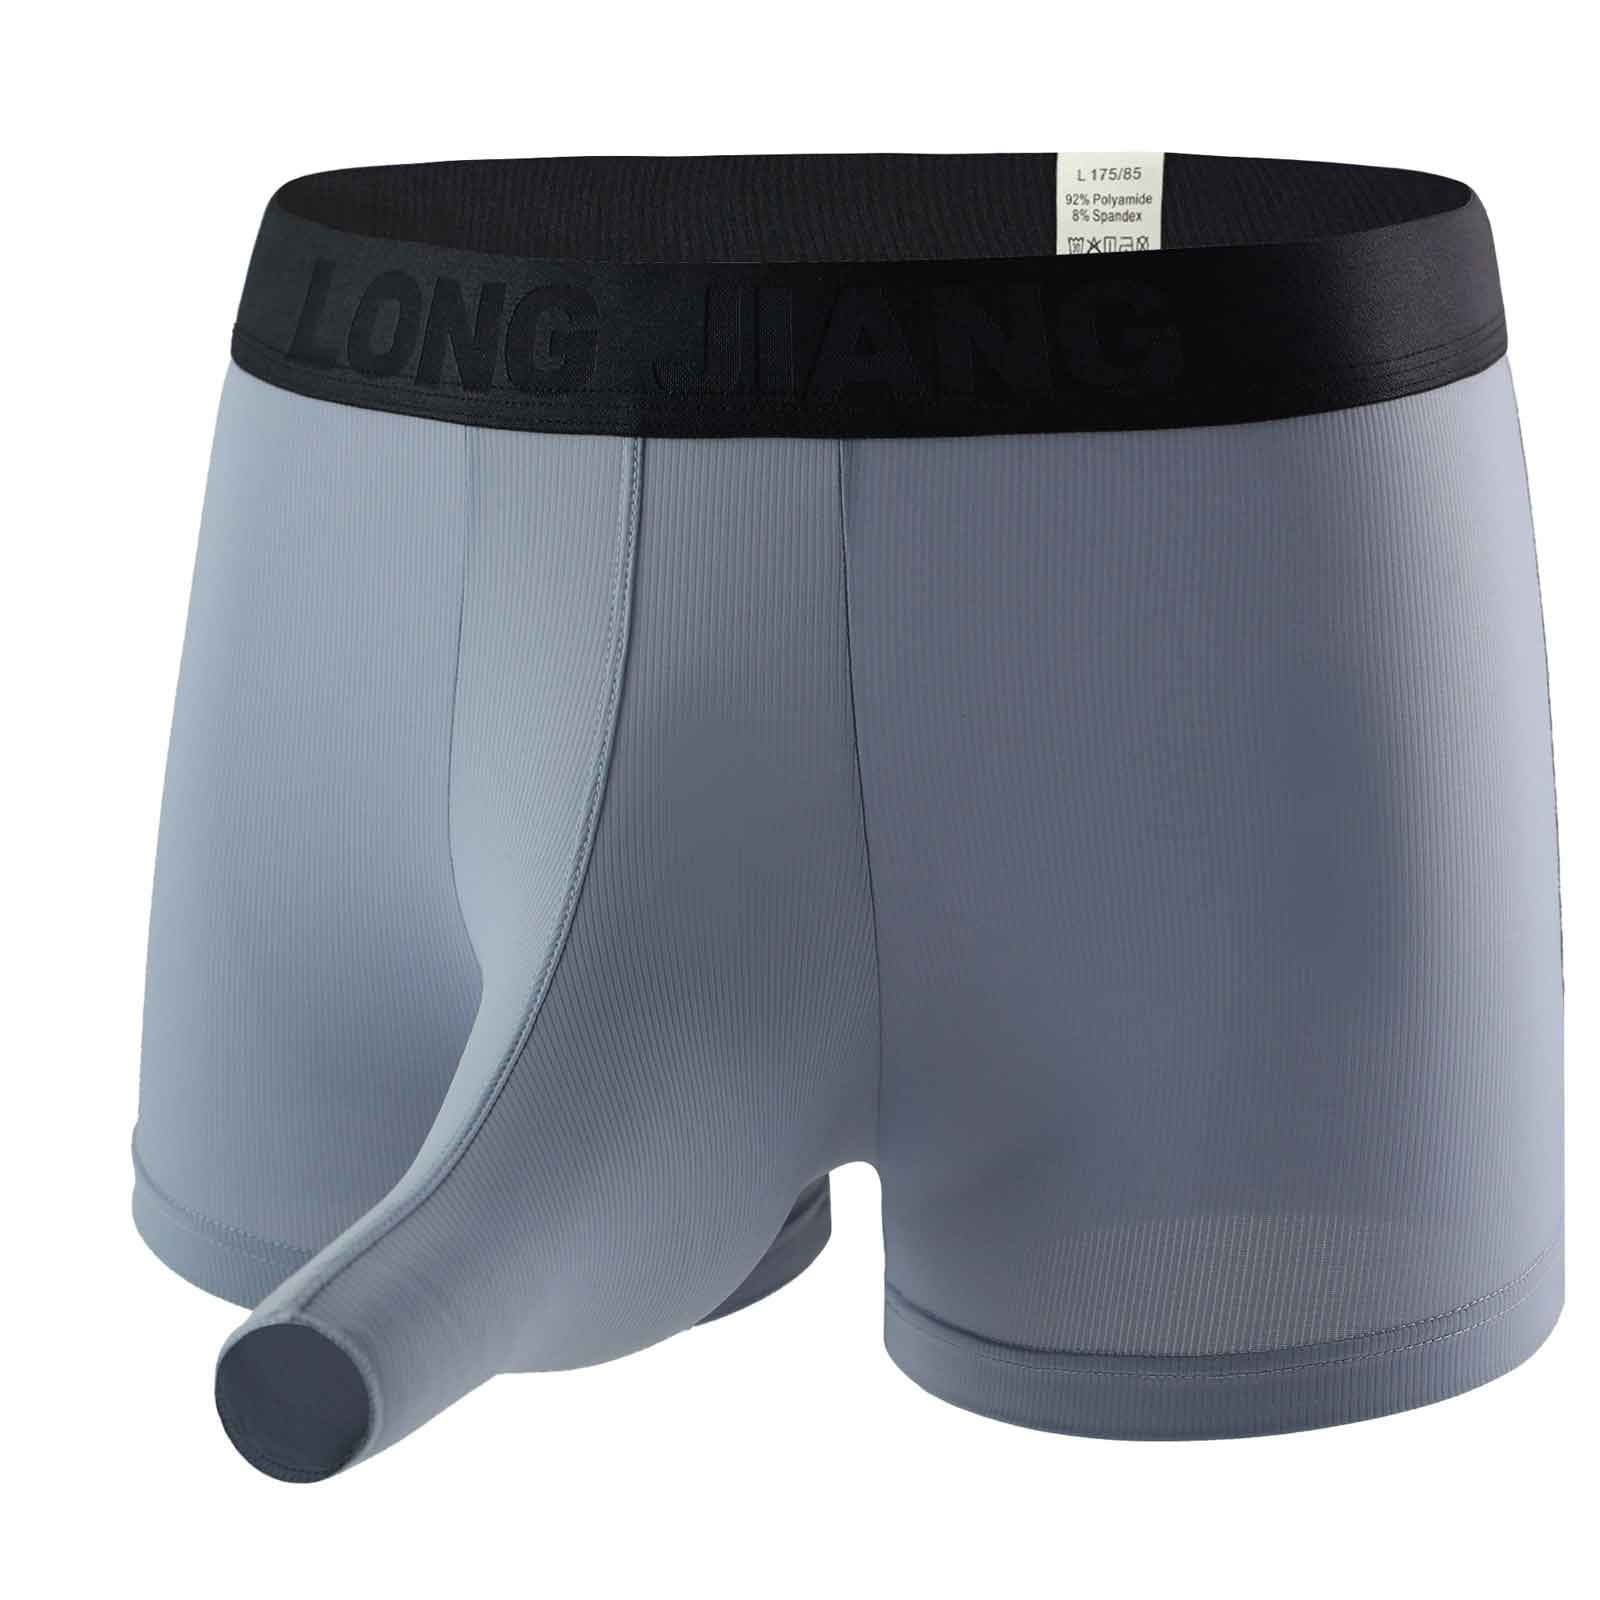 Noarlalf mens boxers Men's Soft Briefs Underpants Knickers Shorts Underwear  mens underwear